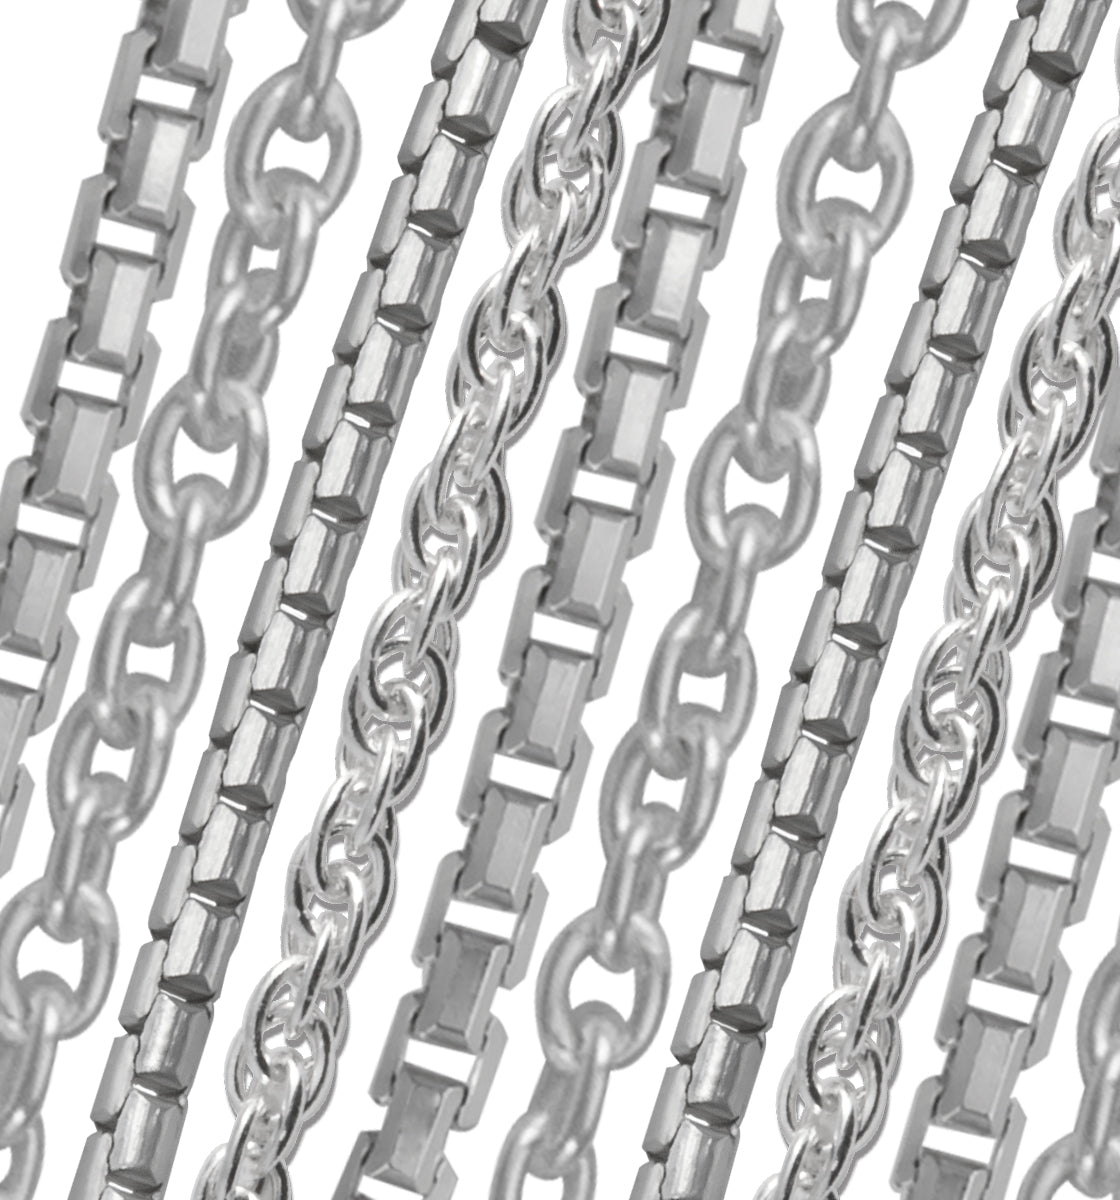 Pendant Chains